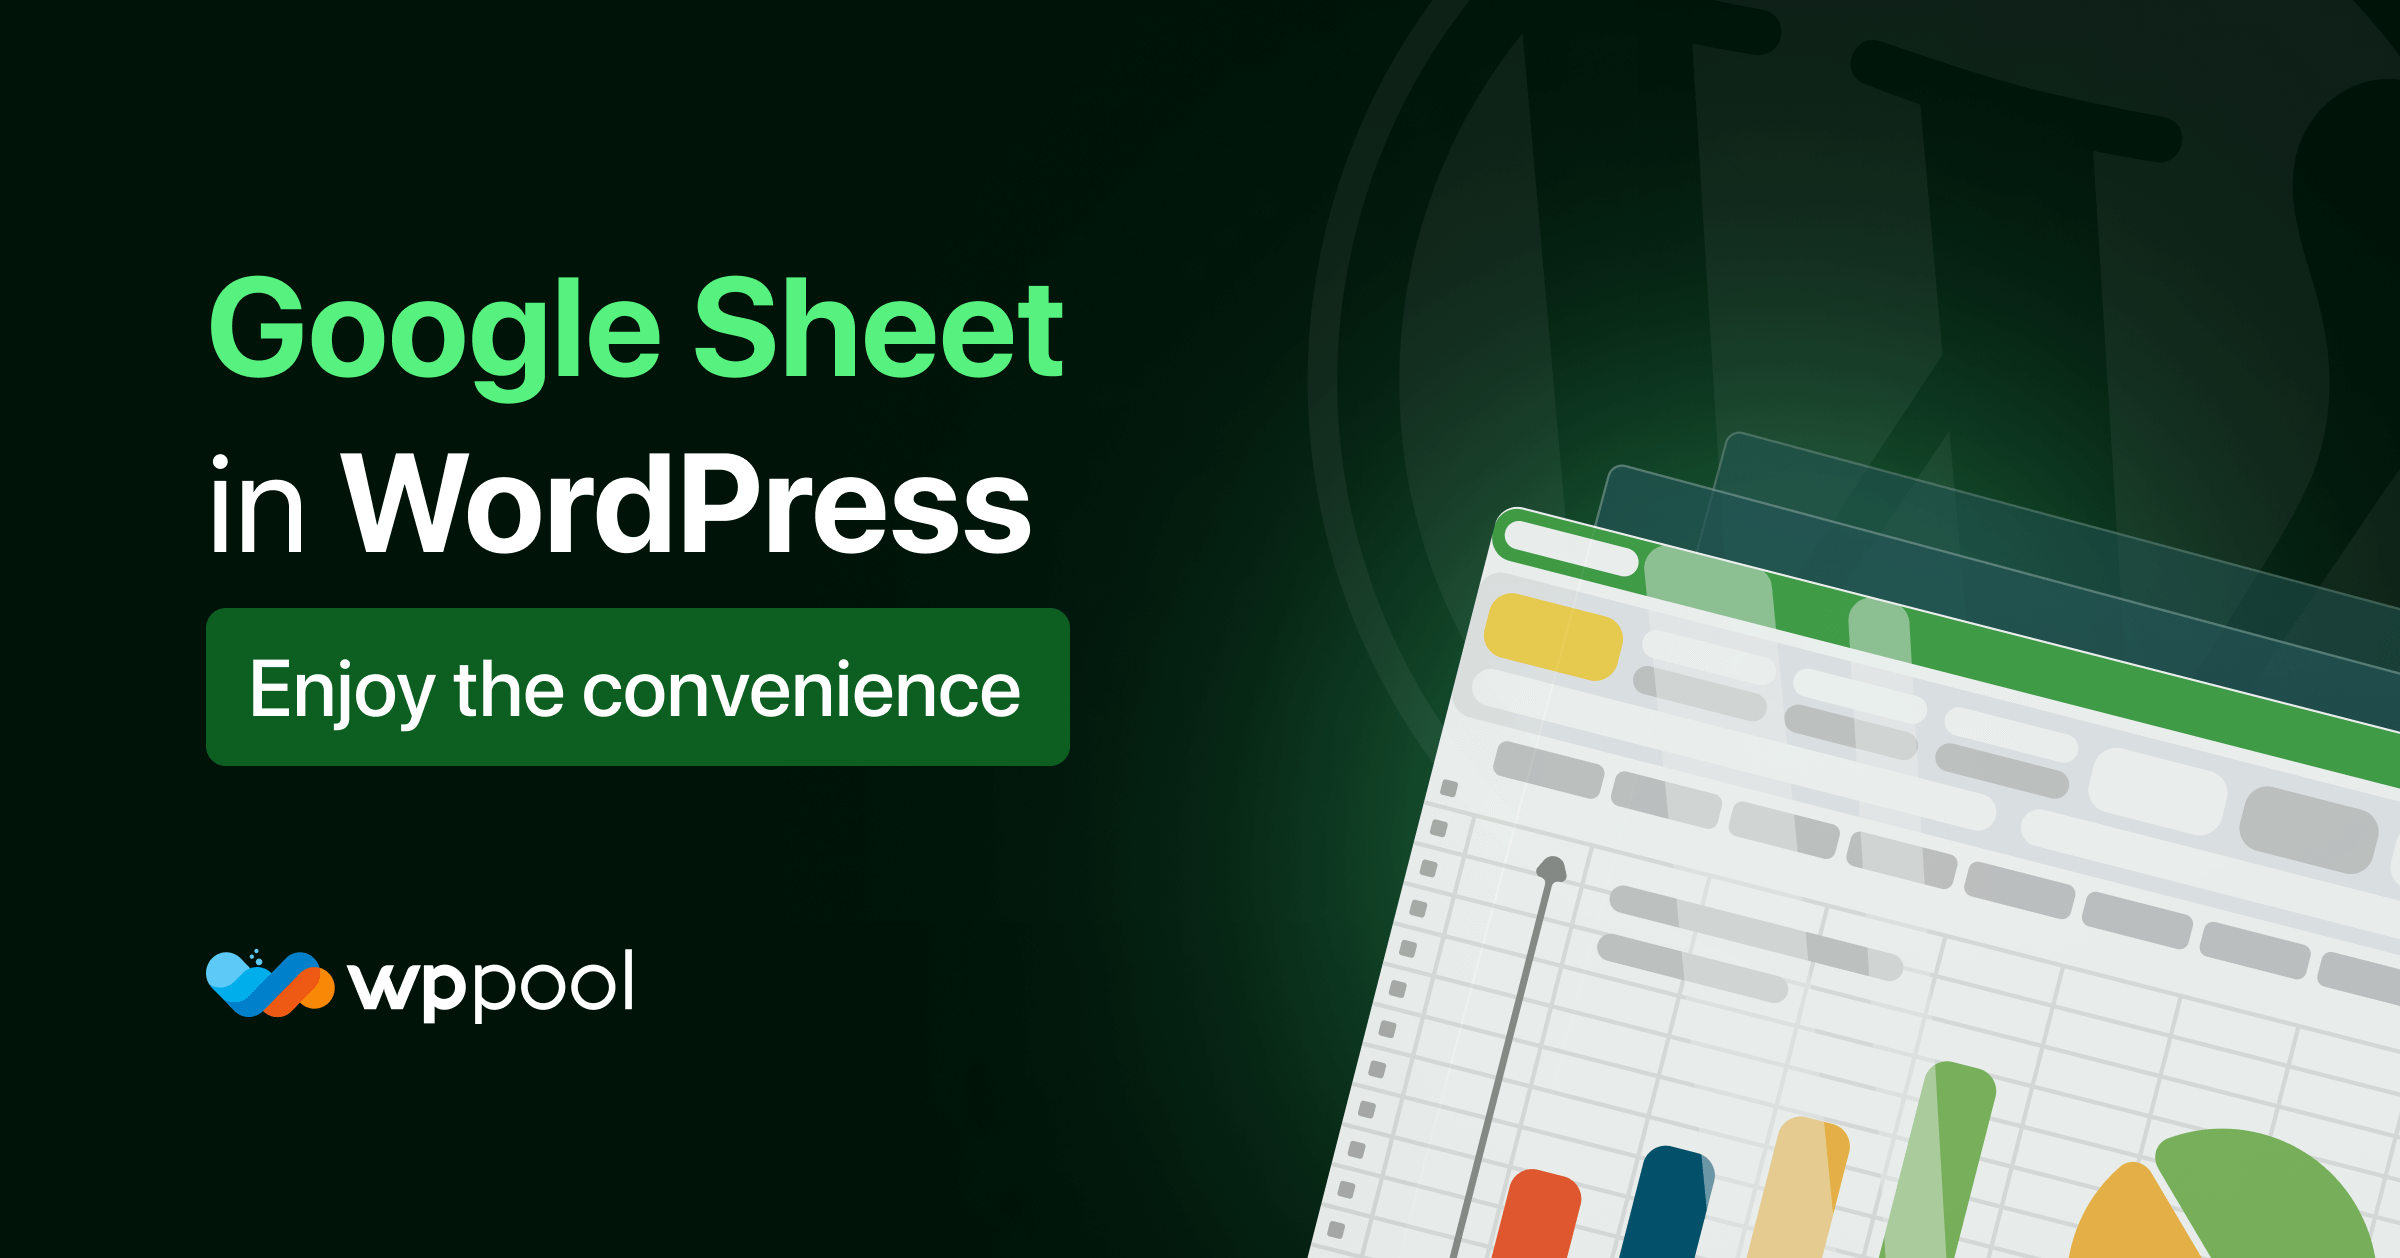 Google Sheet in WordPress: best tips to enjoy the convenience